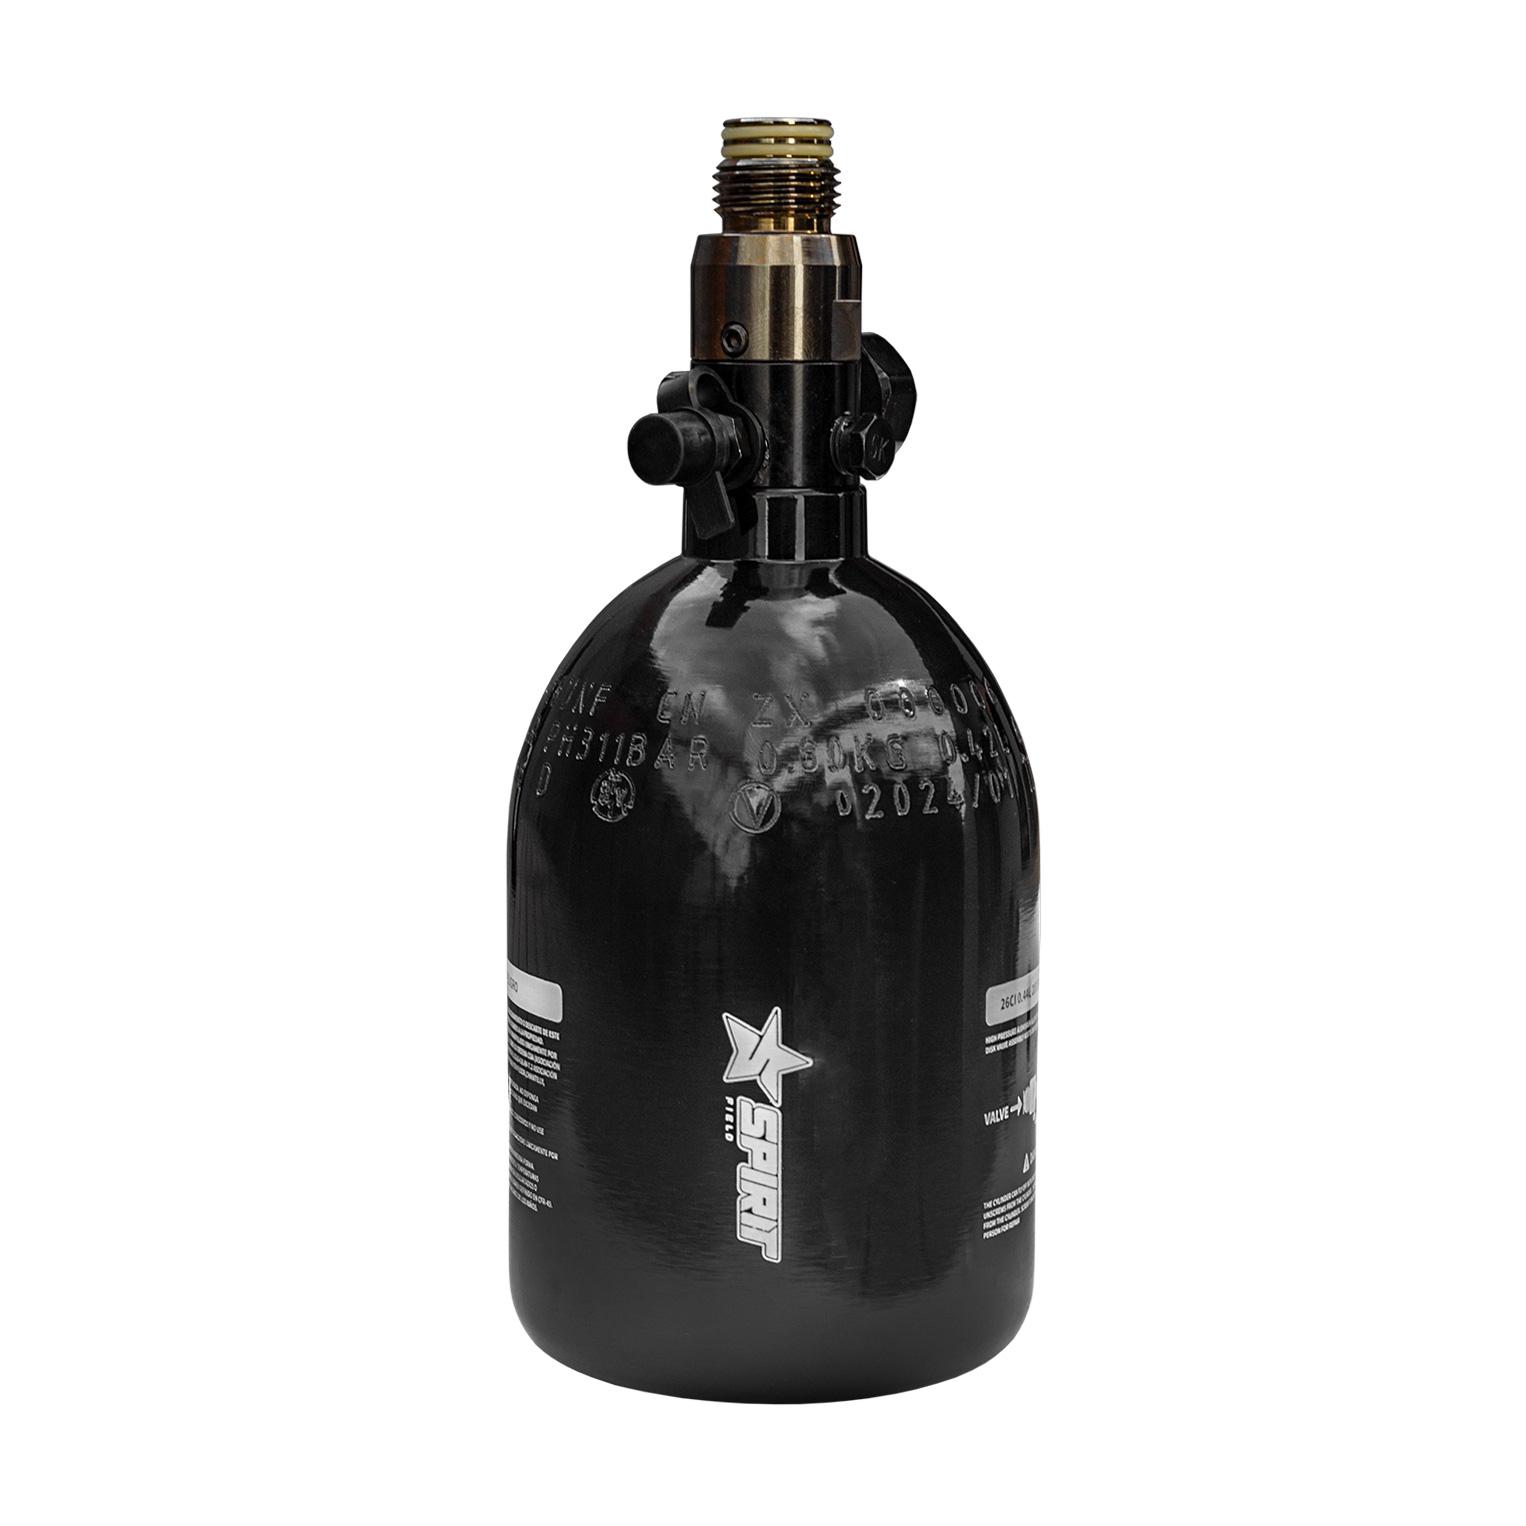 Field Botella 0.4L - 26ci c/ Regulador 3K Psi V3 Brass